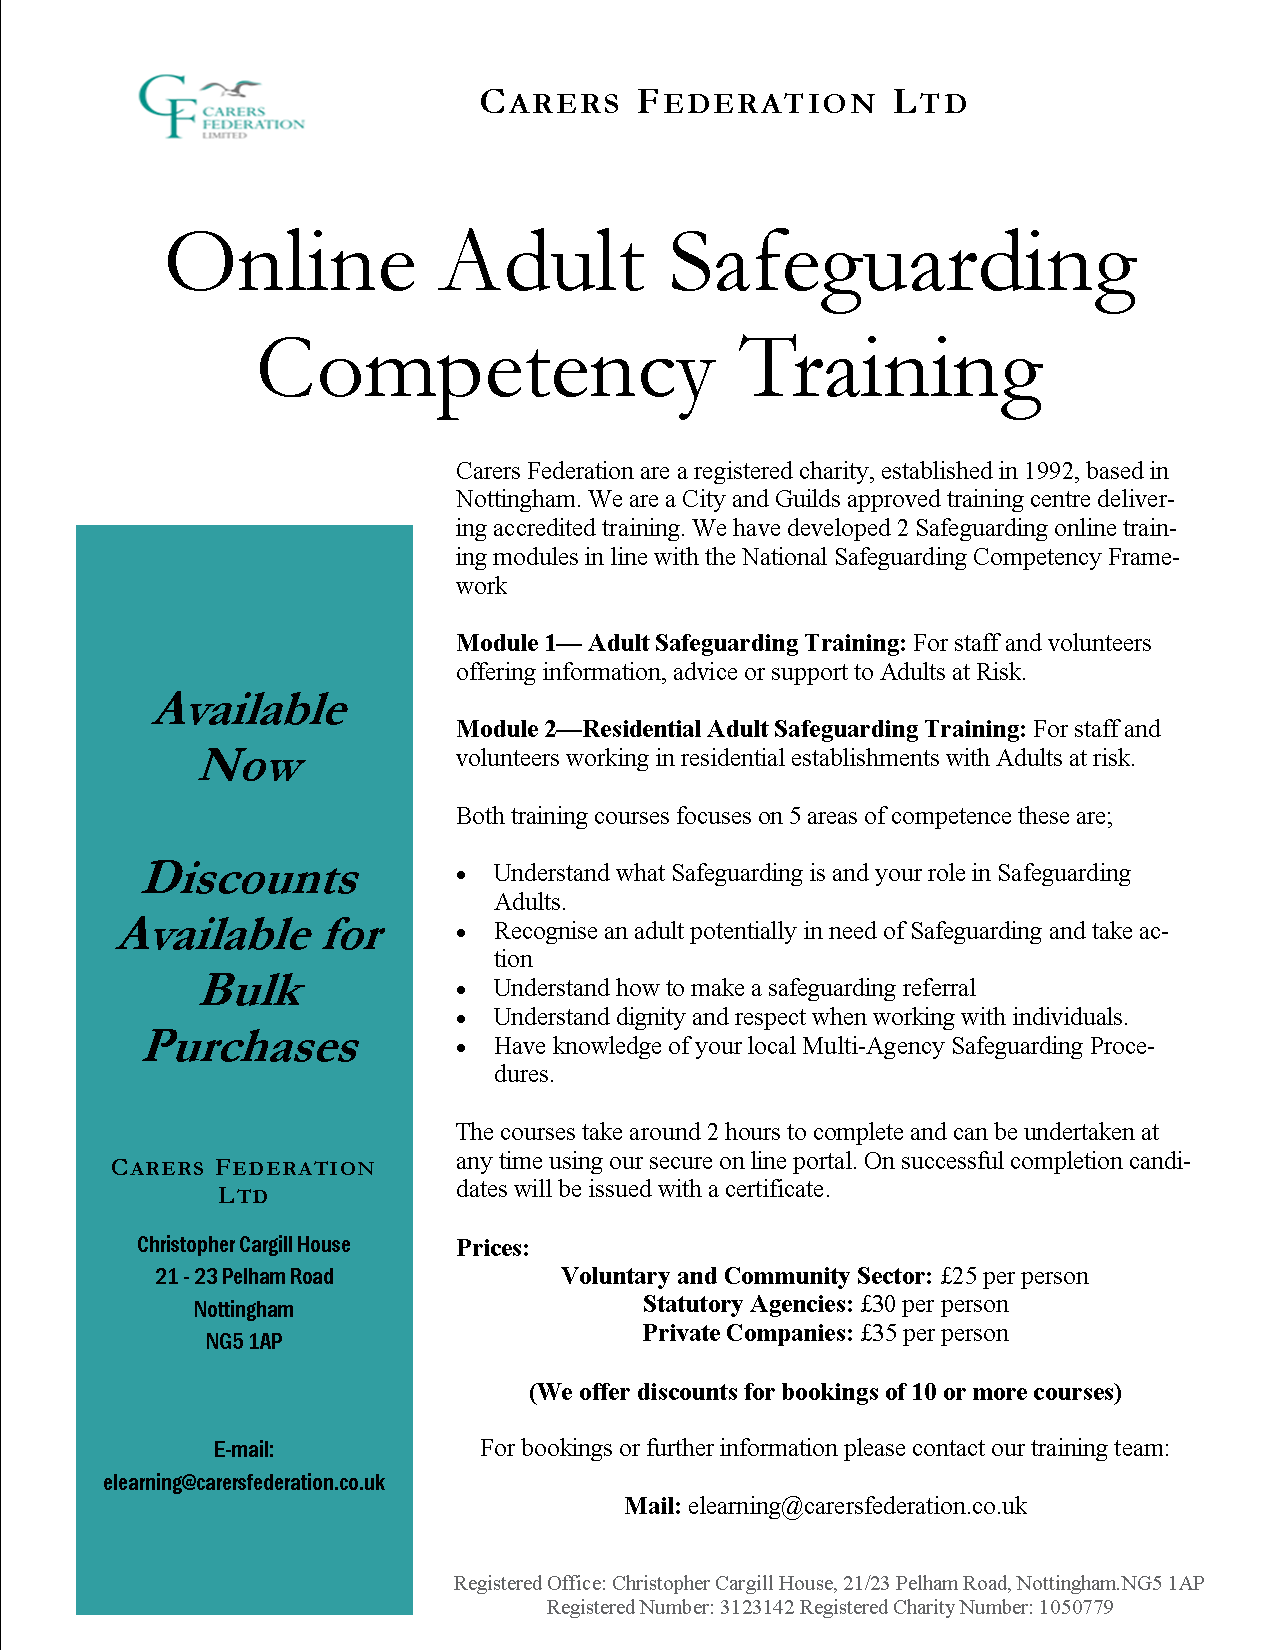 Anhang Safeguarding Training  flyer Feb 2019.png